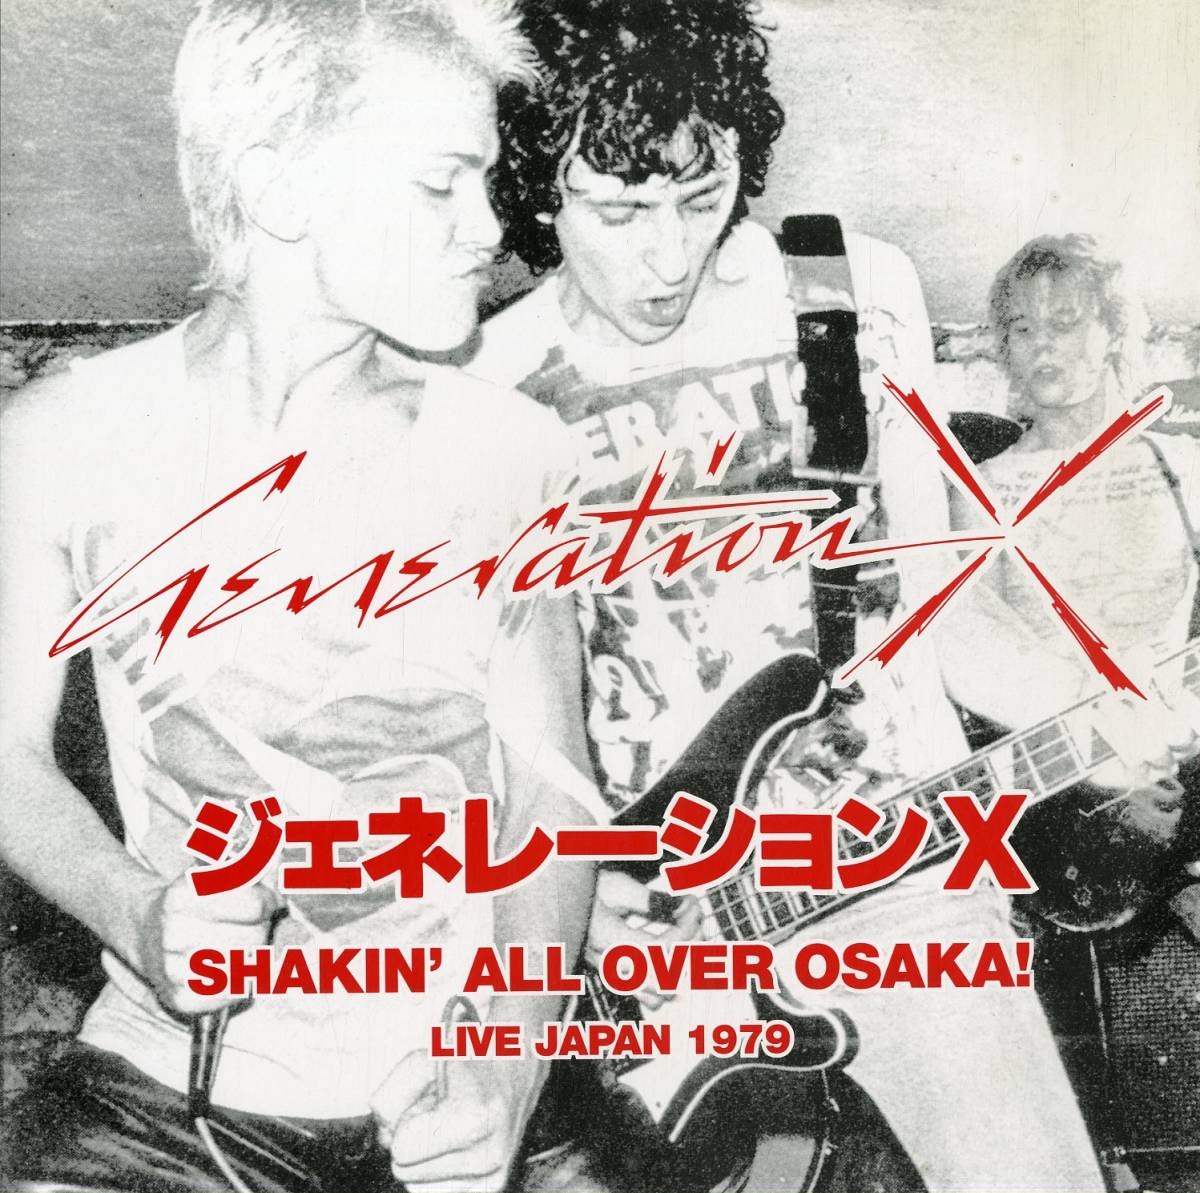 A00575087/LP/ジェネレーションX (GENERATION X)「Shakin All Over Osaka! Live Japan 1979 (2001年・HR-010・パンク・PUNK)」_画像1